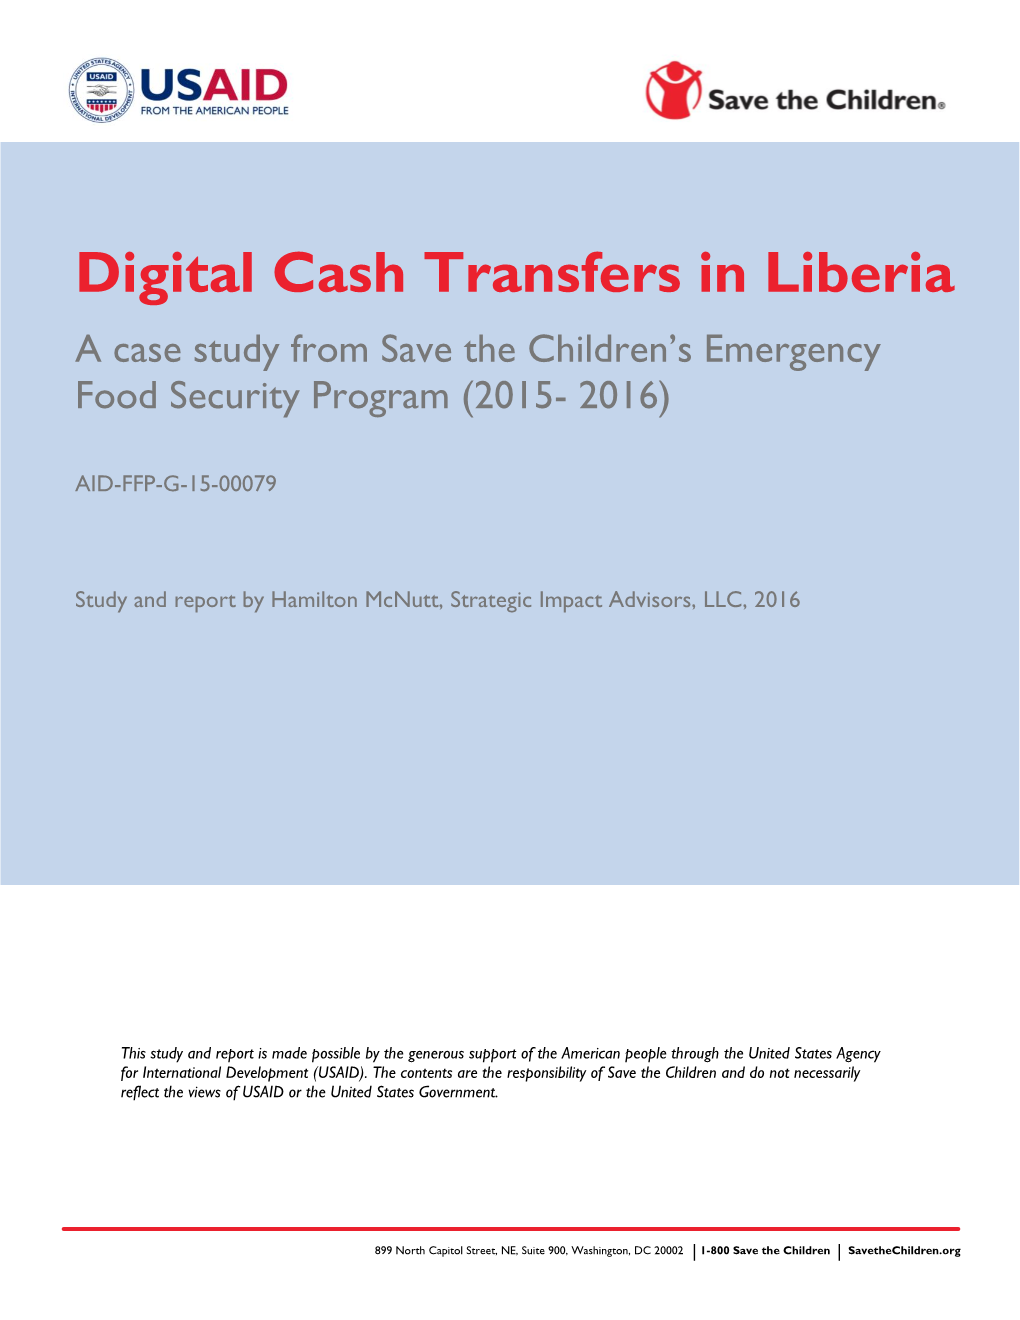 Cash Transfers Liberia